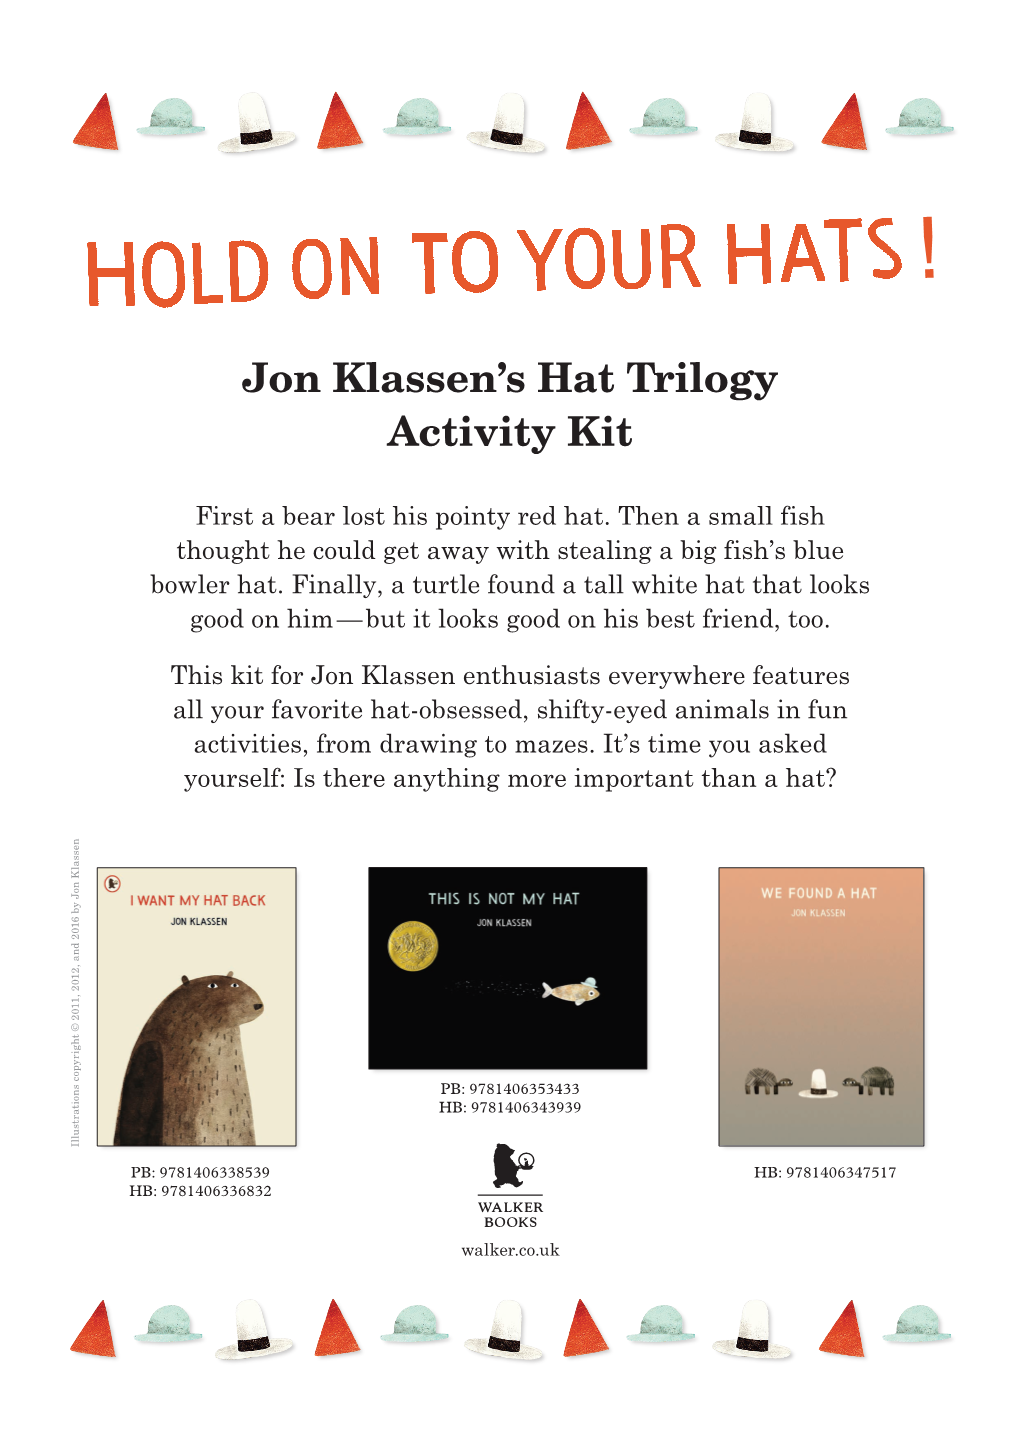 Jon Klassen's Hat Trilogy Activity